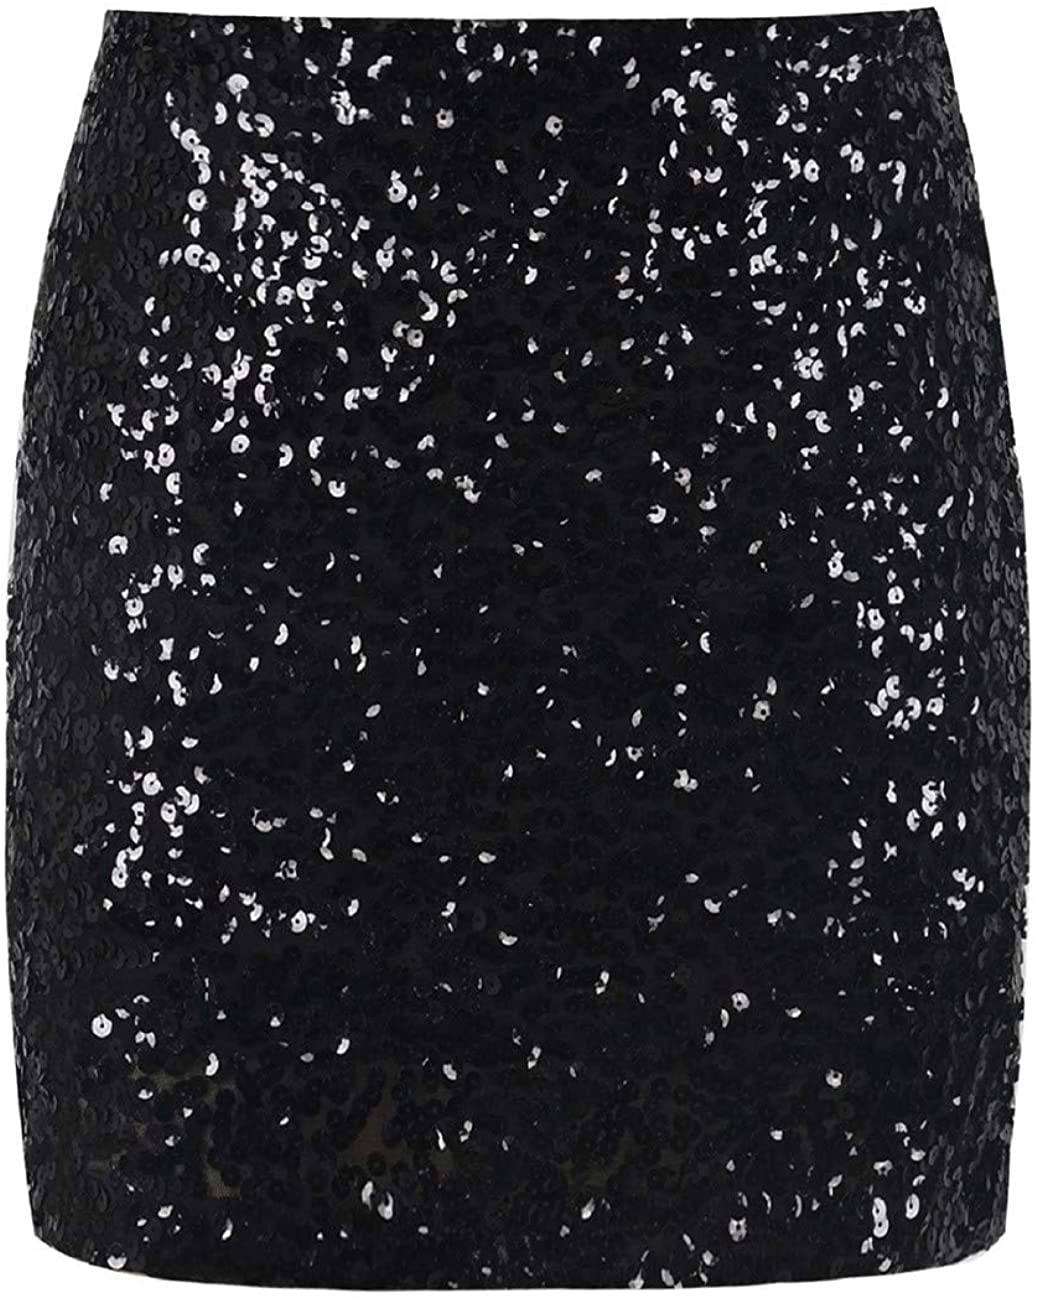 Size 20-22 NEXT BNWT Women's Black Faux Leather Coated Zip Mini Pencil Skirt